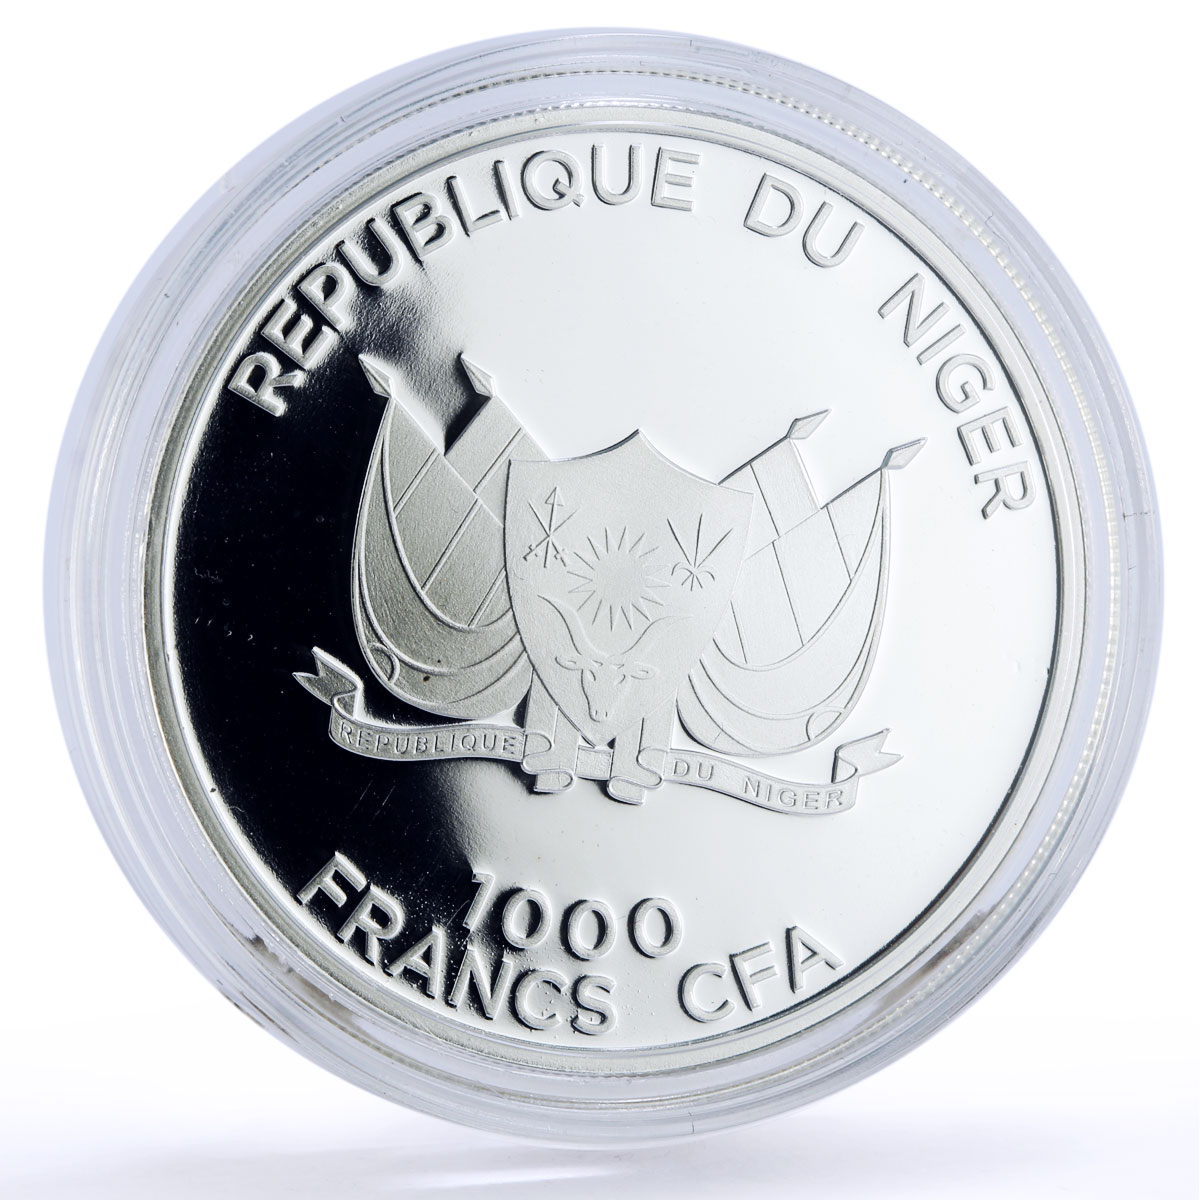 Niger 1000 francs Ramadan Karim Quran gilded colored silver coin 2012